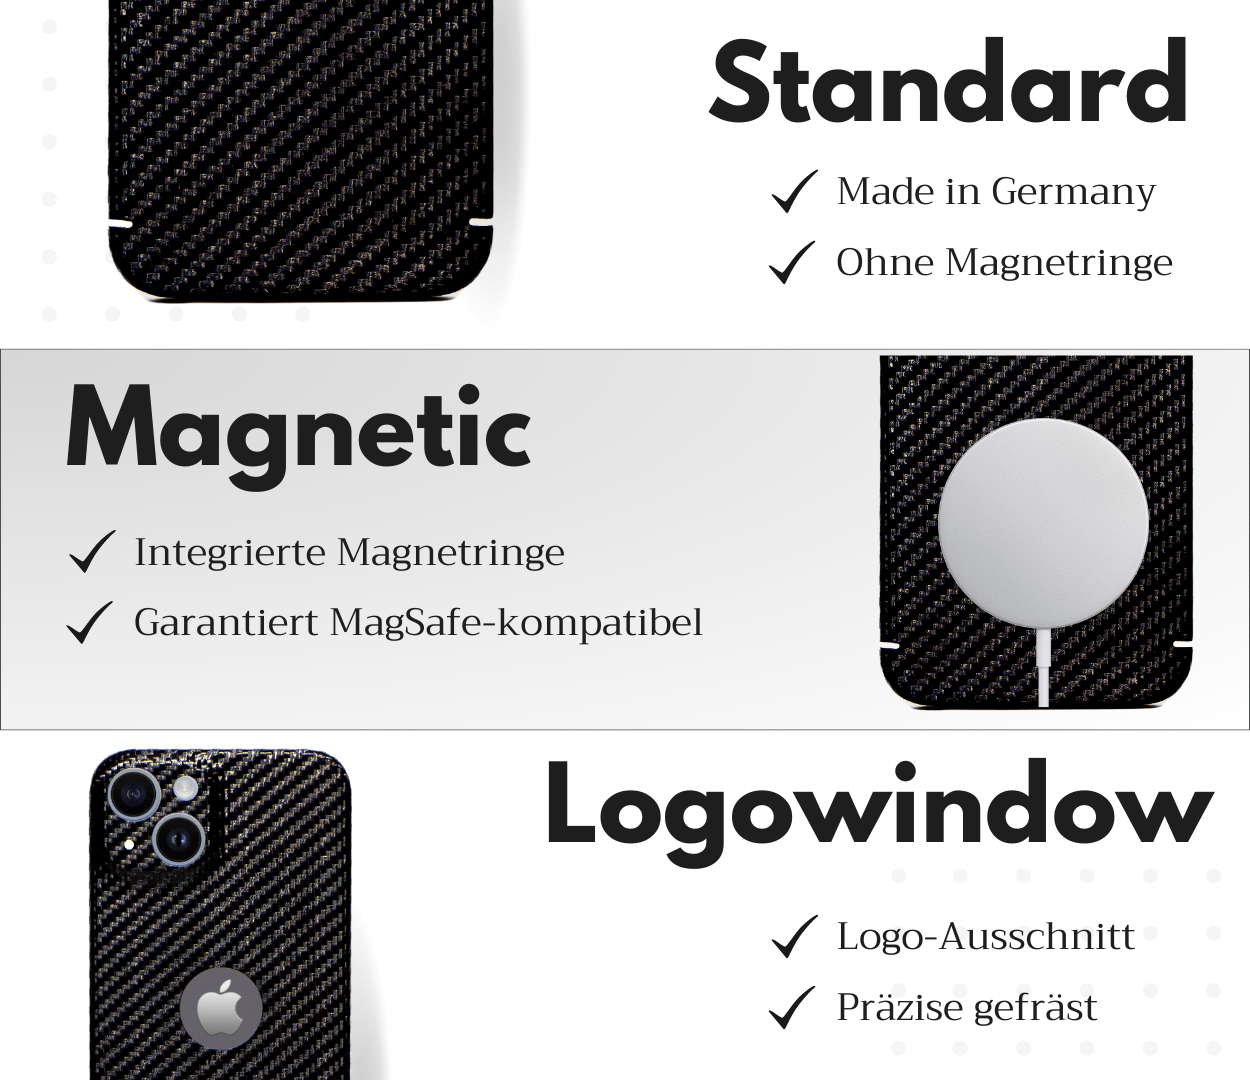 Standard, Magnetic oder Logowindow